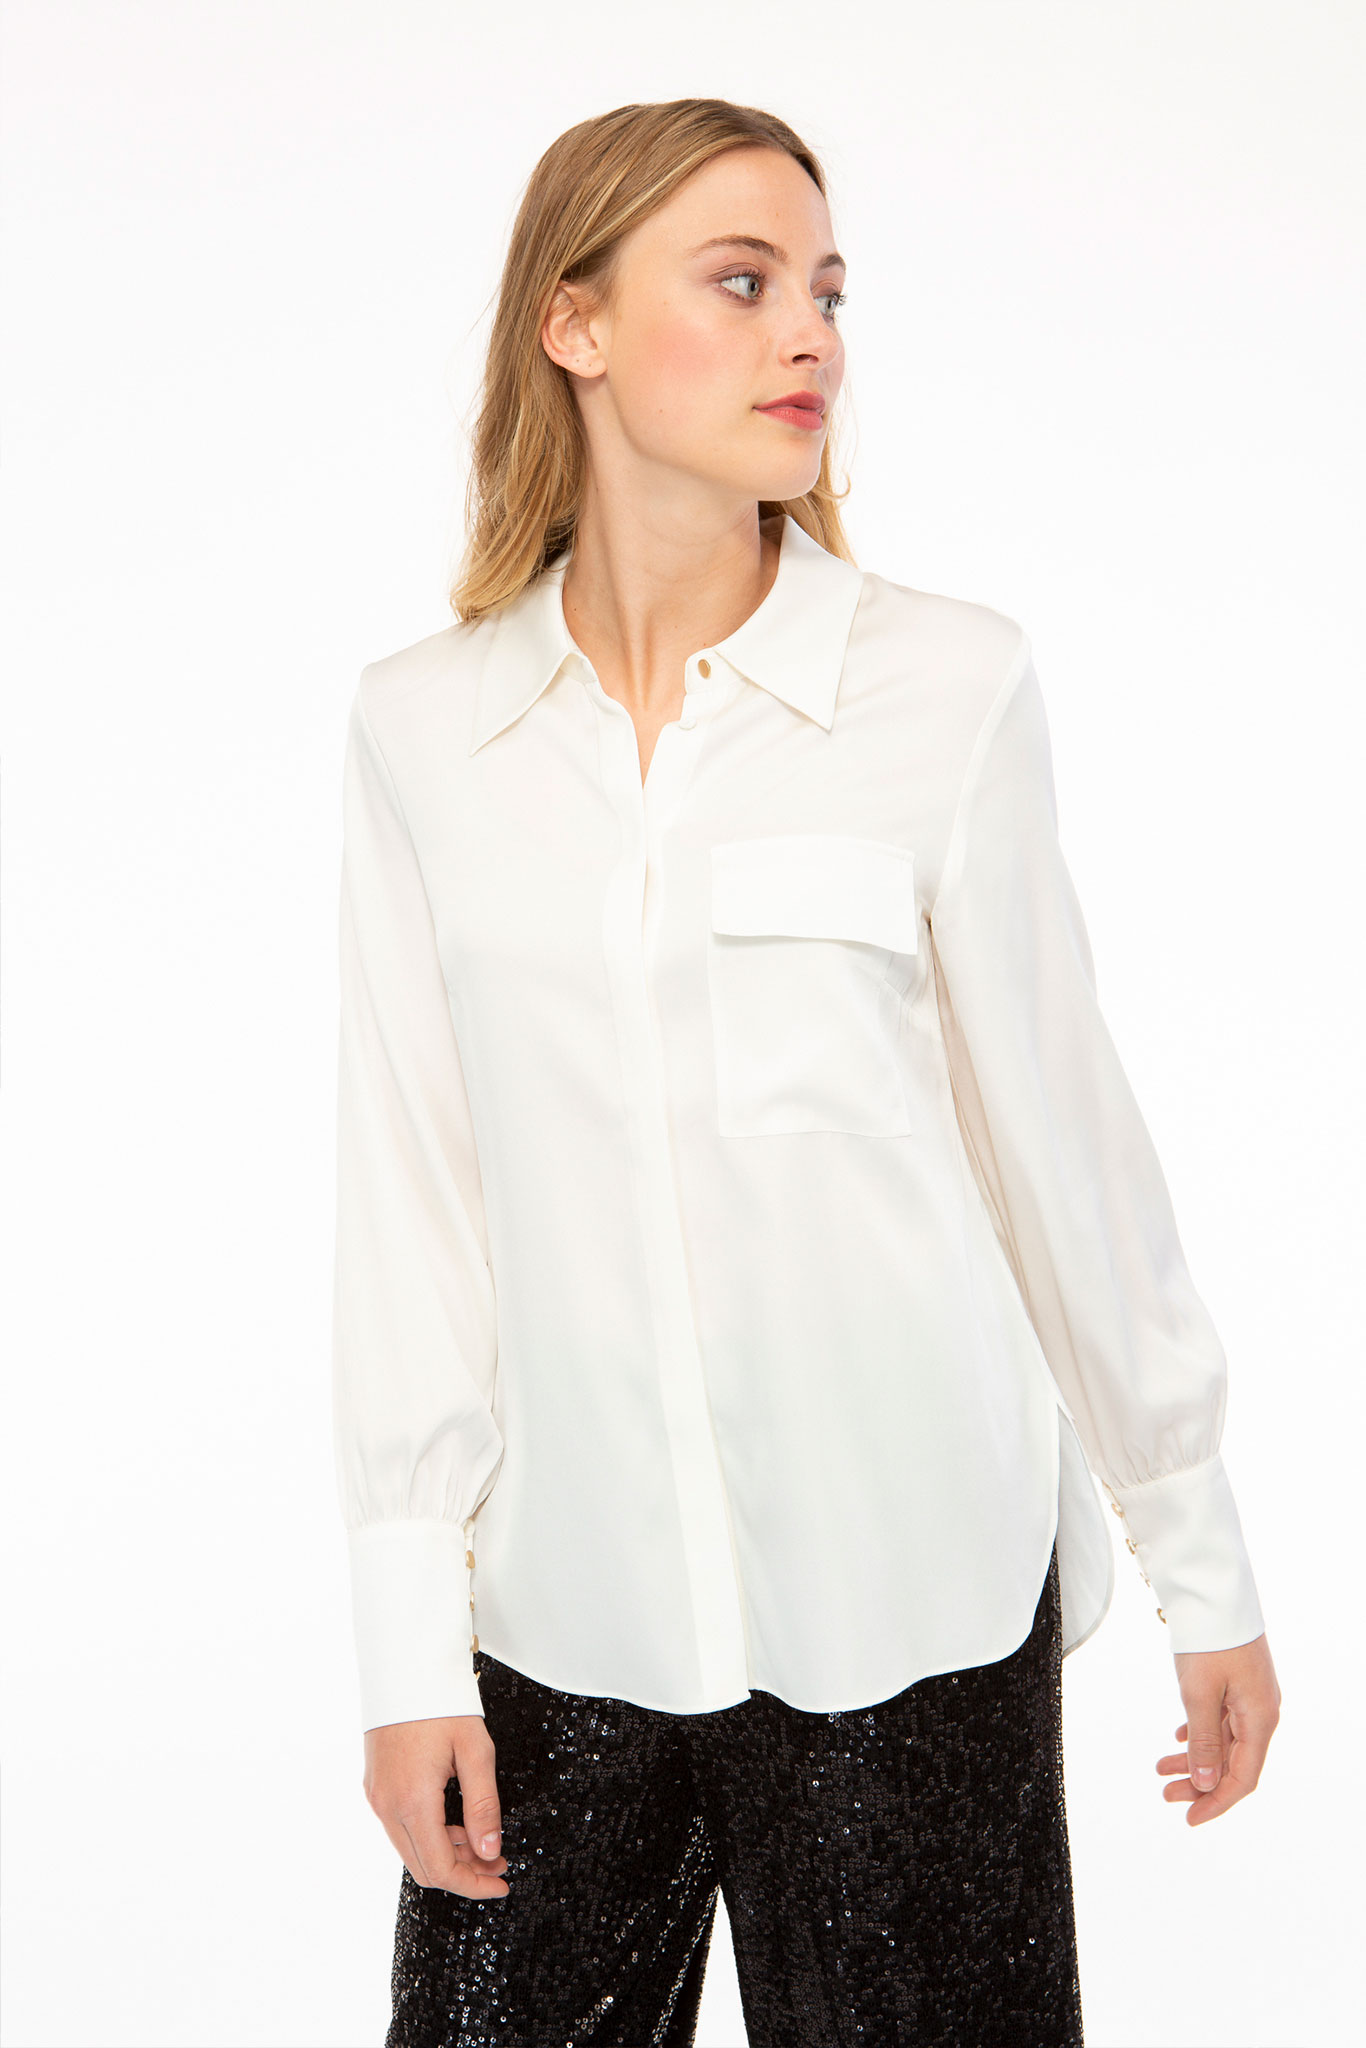 Classic buttoned white silk shirt